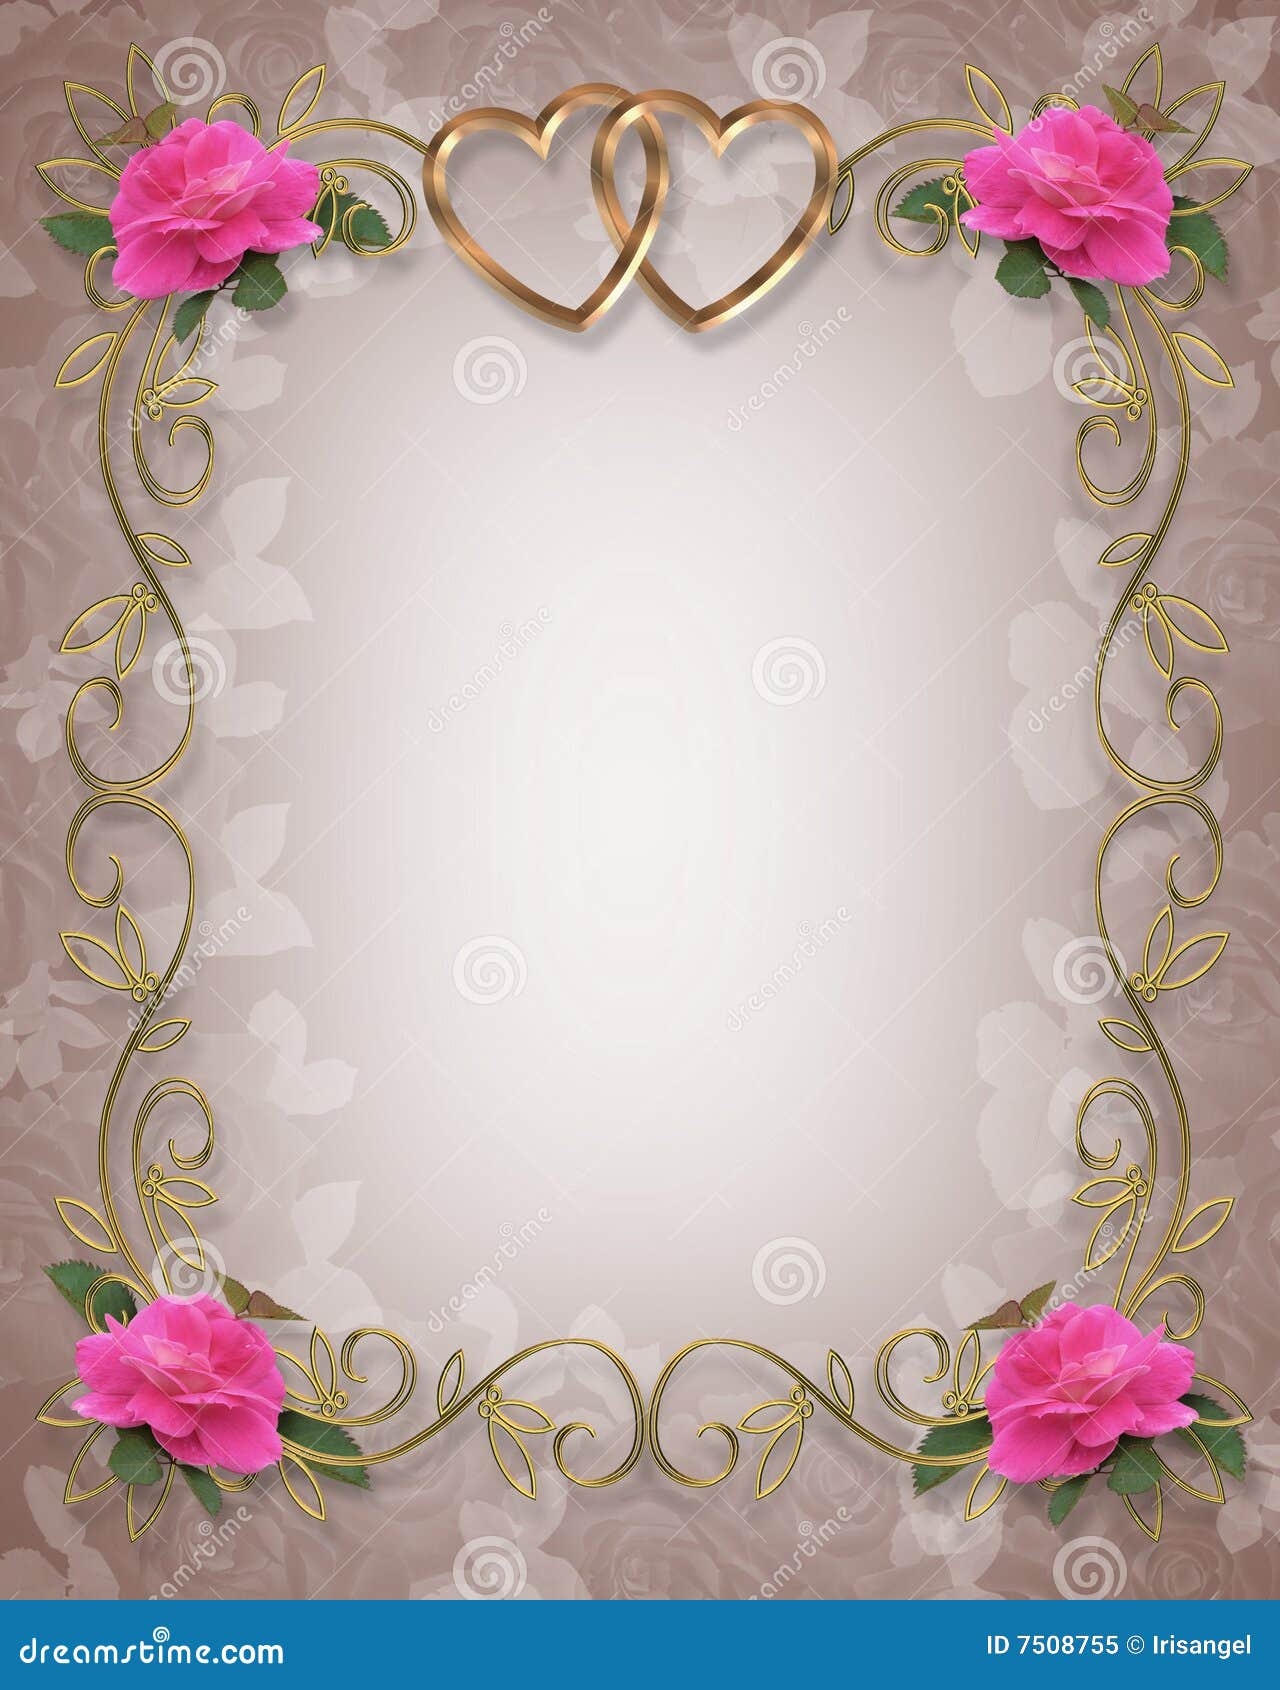 Pink Roses Wedding Border Royalty Free Stock Photo - Image: 7508755